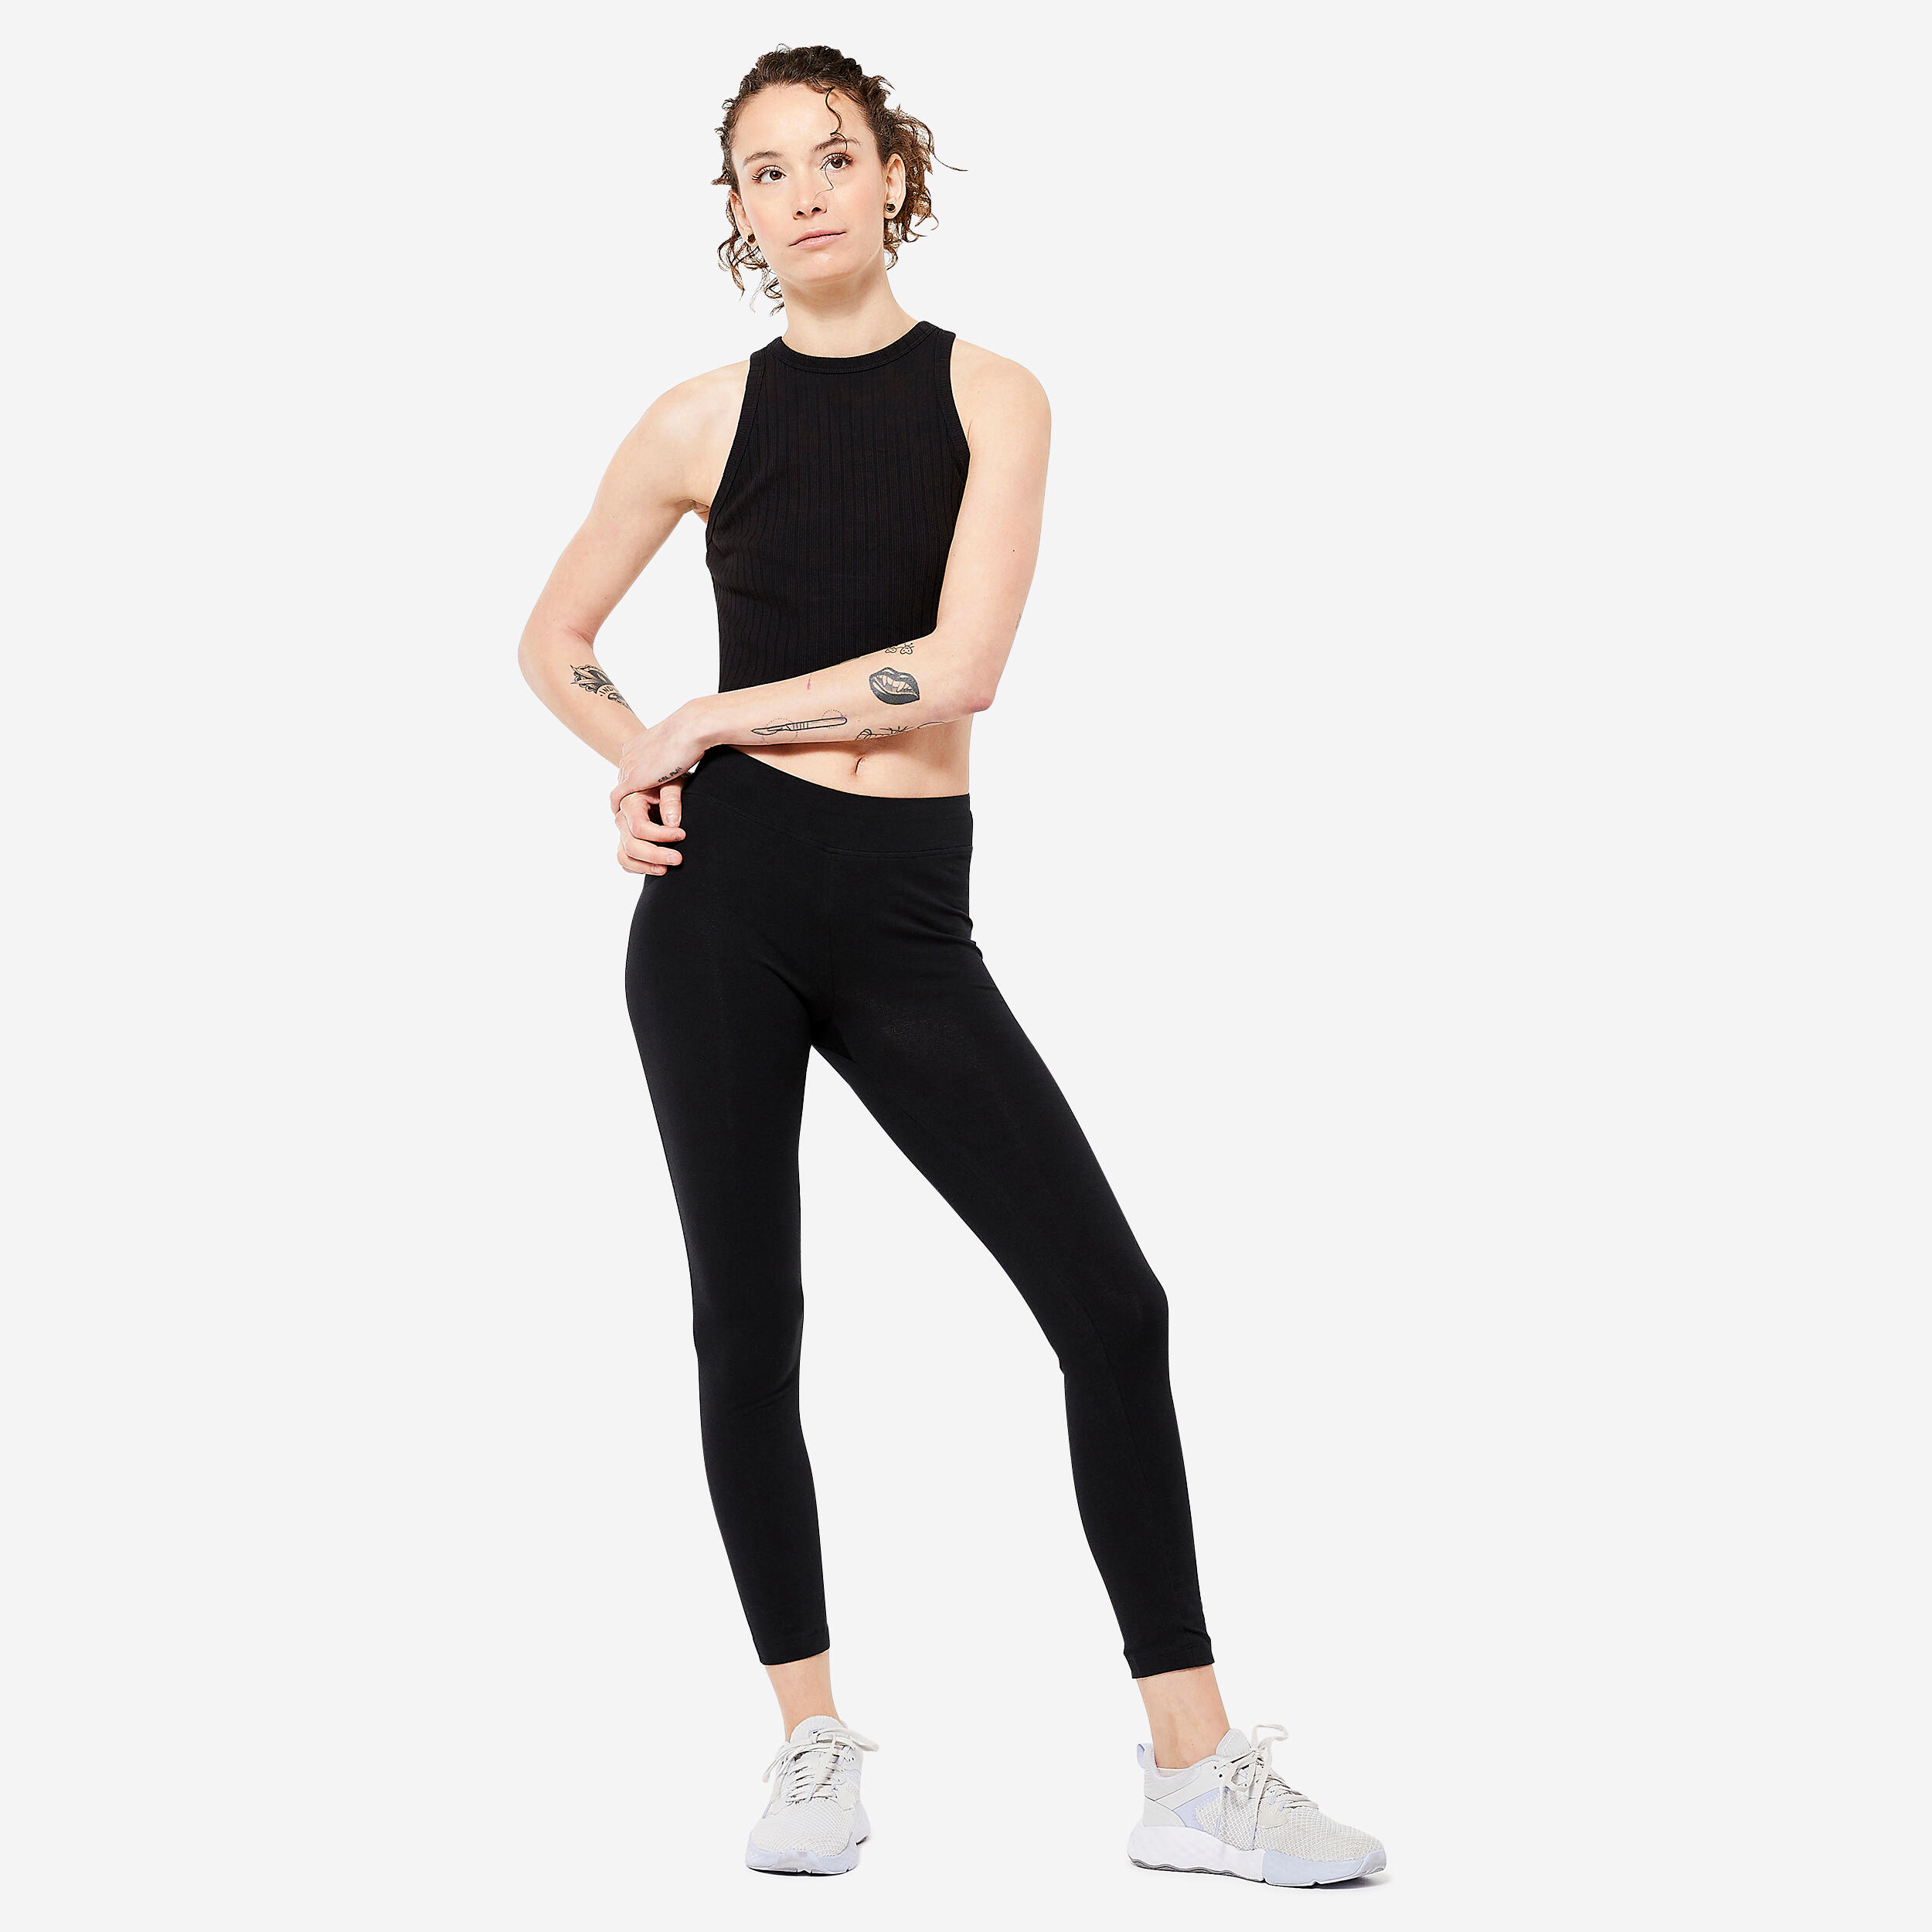 Women's Fitness Cardio Short Leggings with Phone Pocket - Black